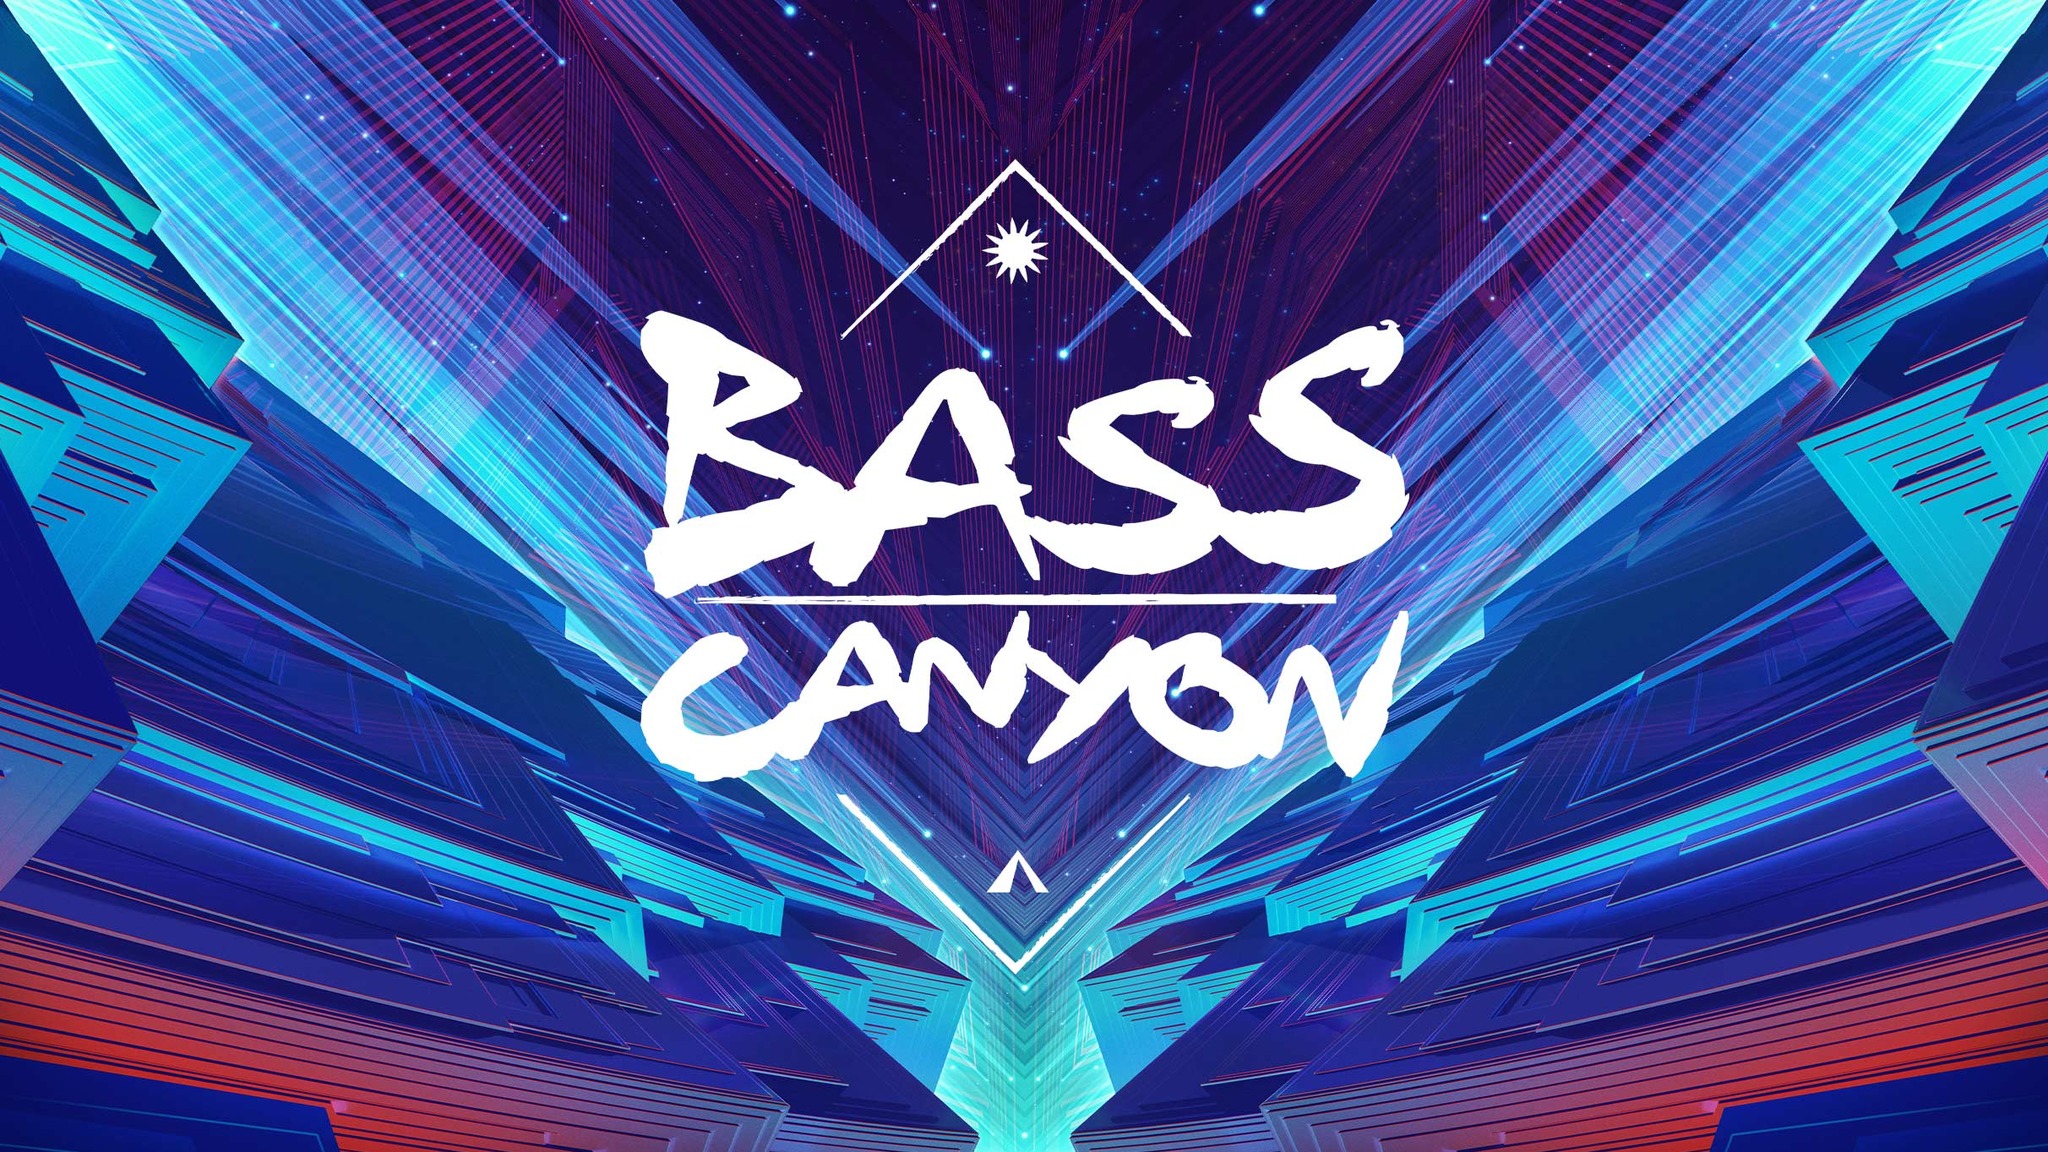 Bass Canyon Tickets, 2022 2023 Concert Tour Dates Ticketmaster